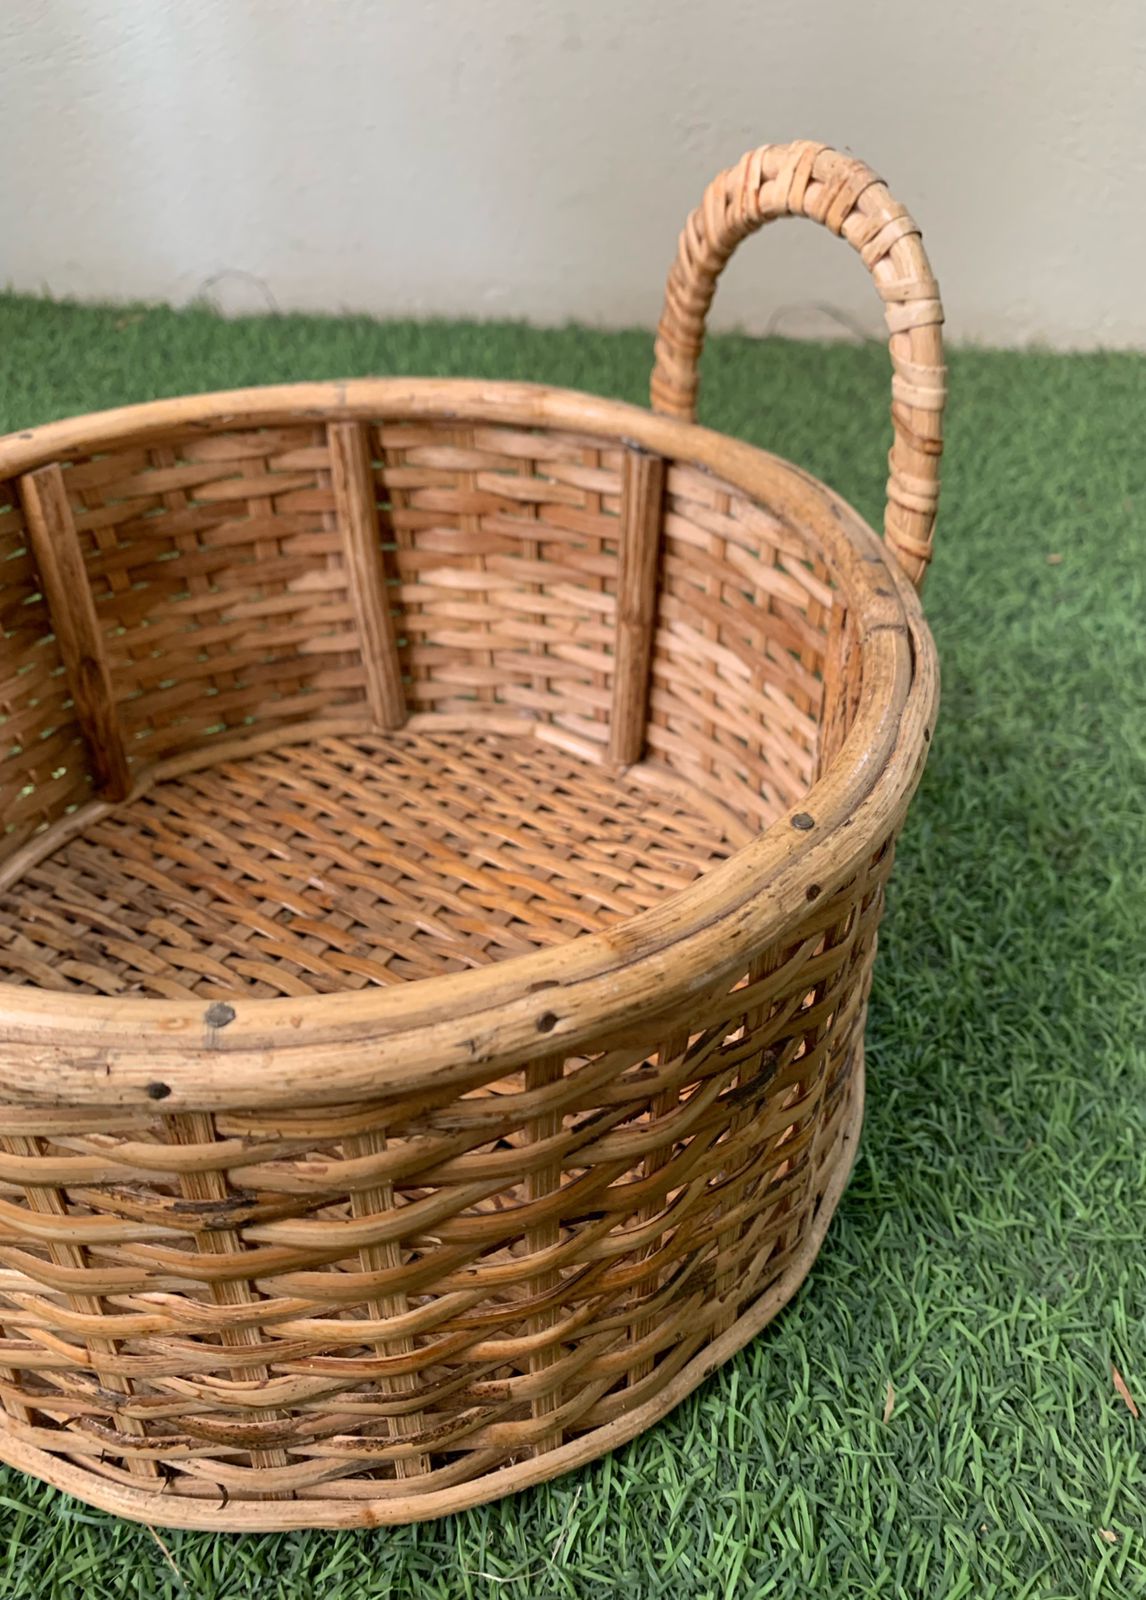 Rattan cane Basket